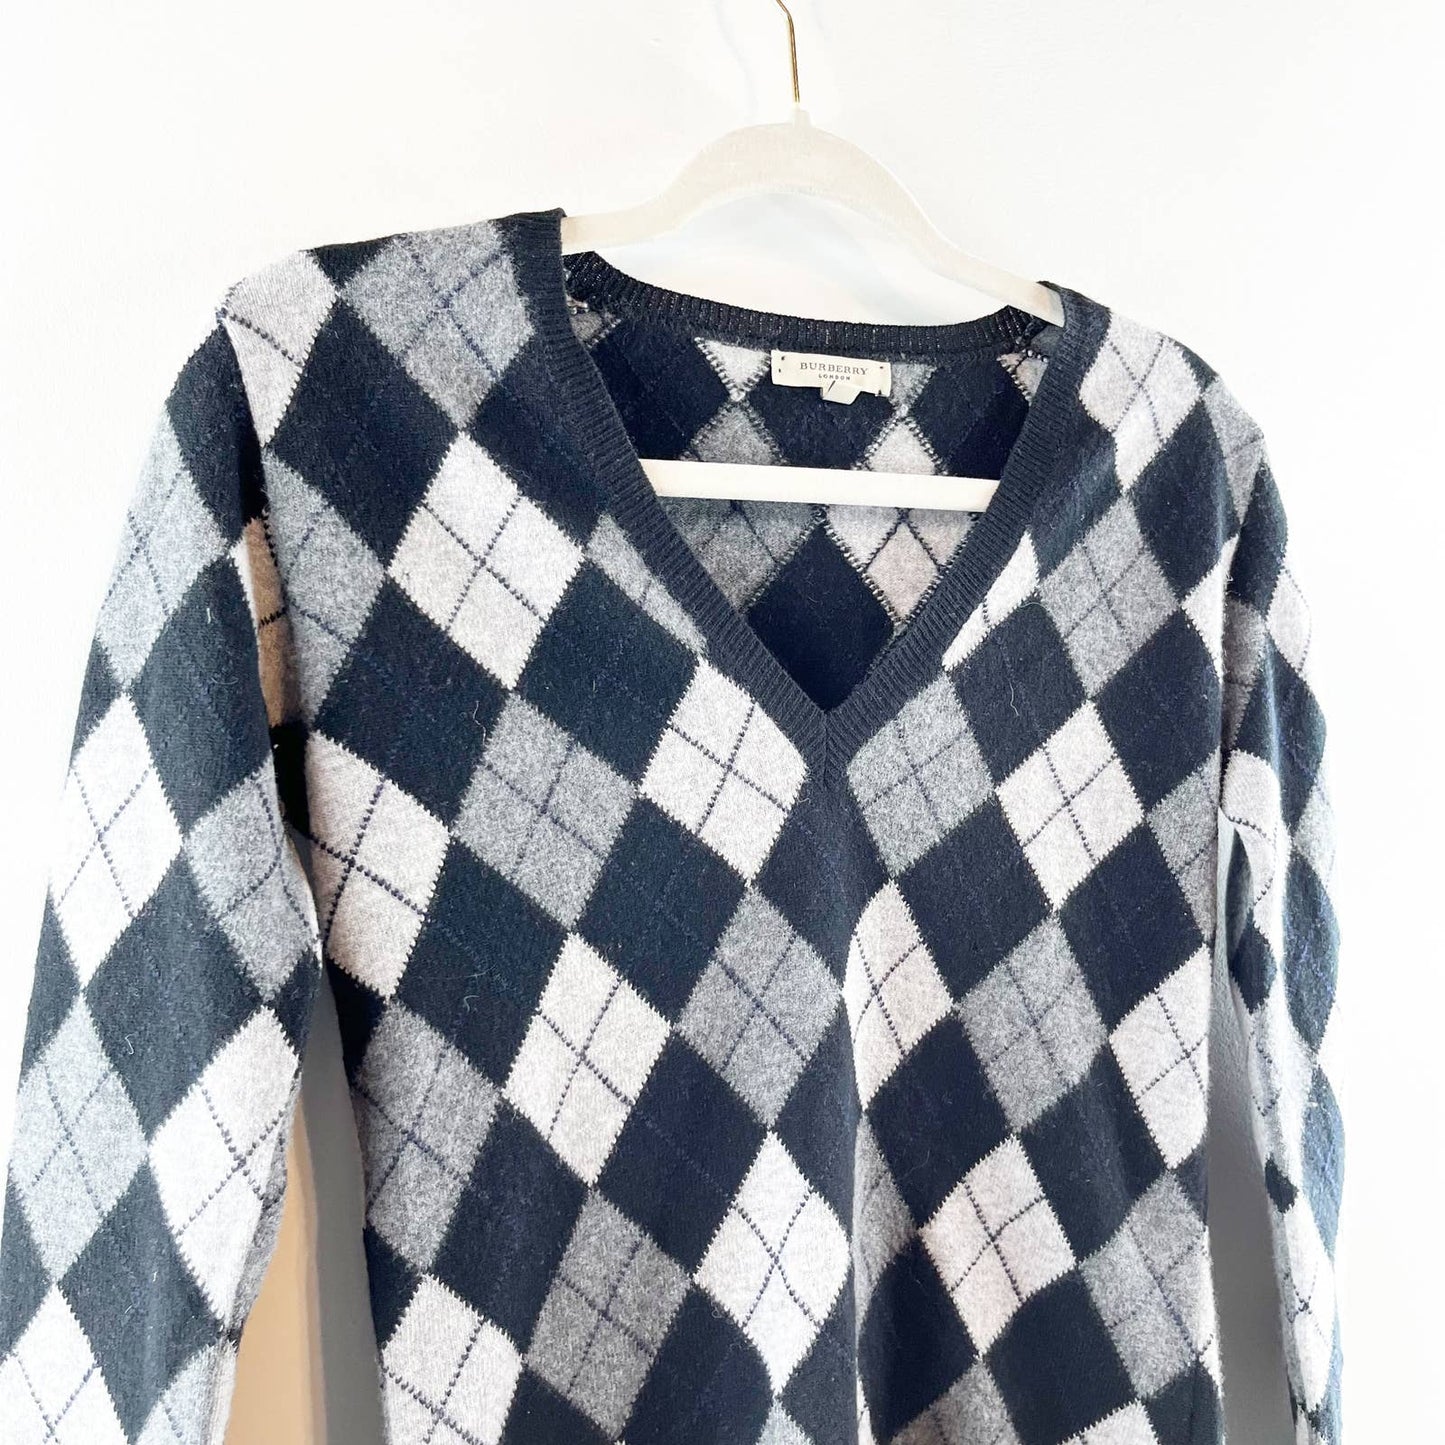 Vintage Burberry Merino Wool Long Sleeve Argyle Pullover Sweater Black White XS